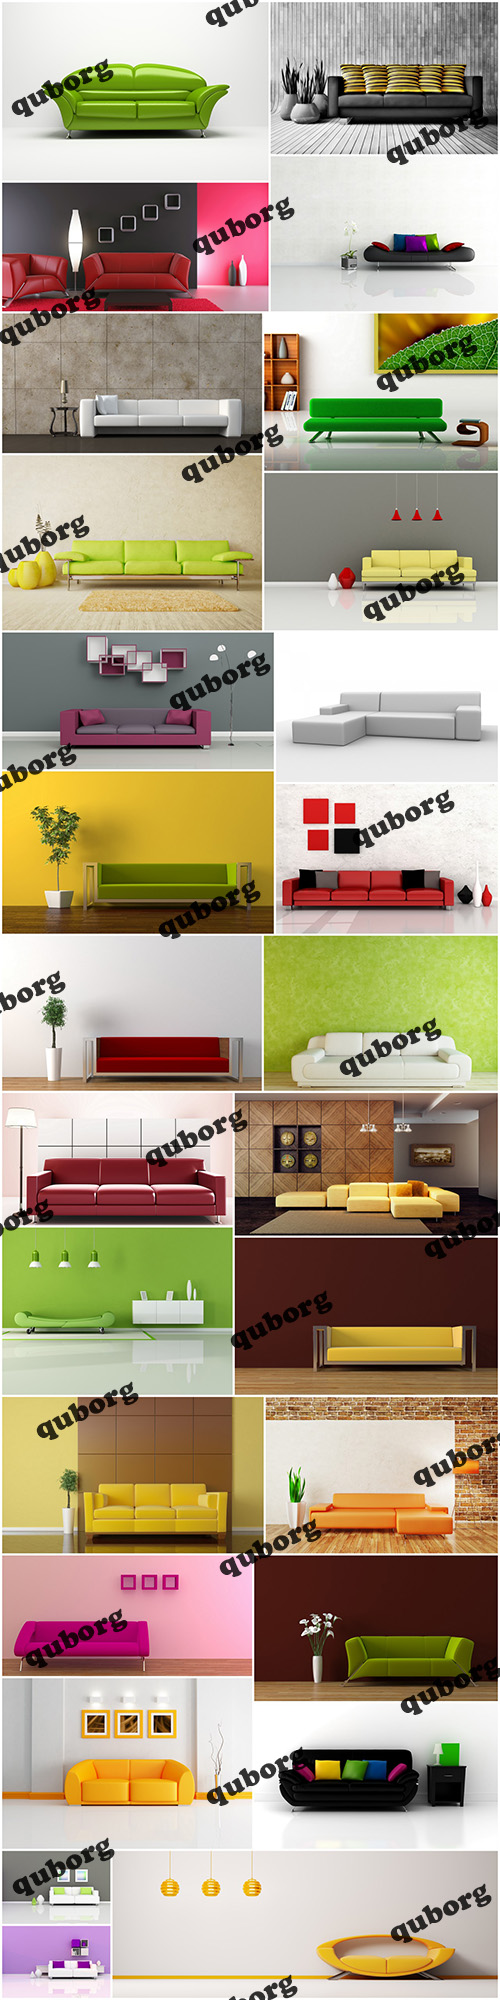 Stock Photos - Sofa